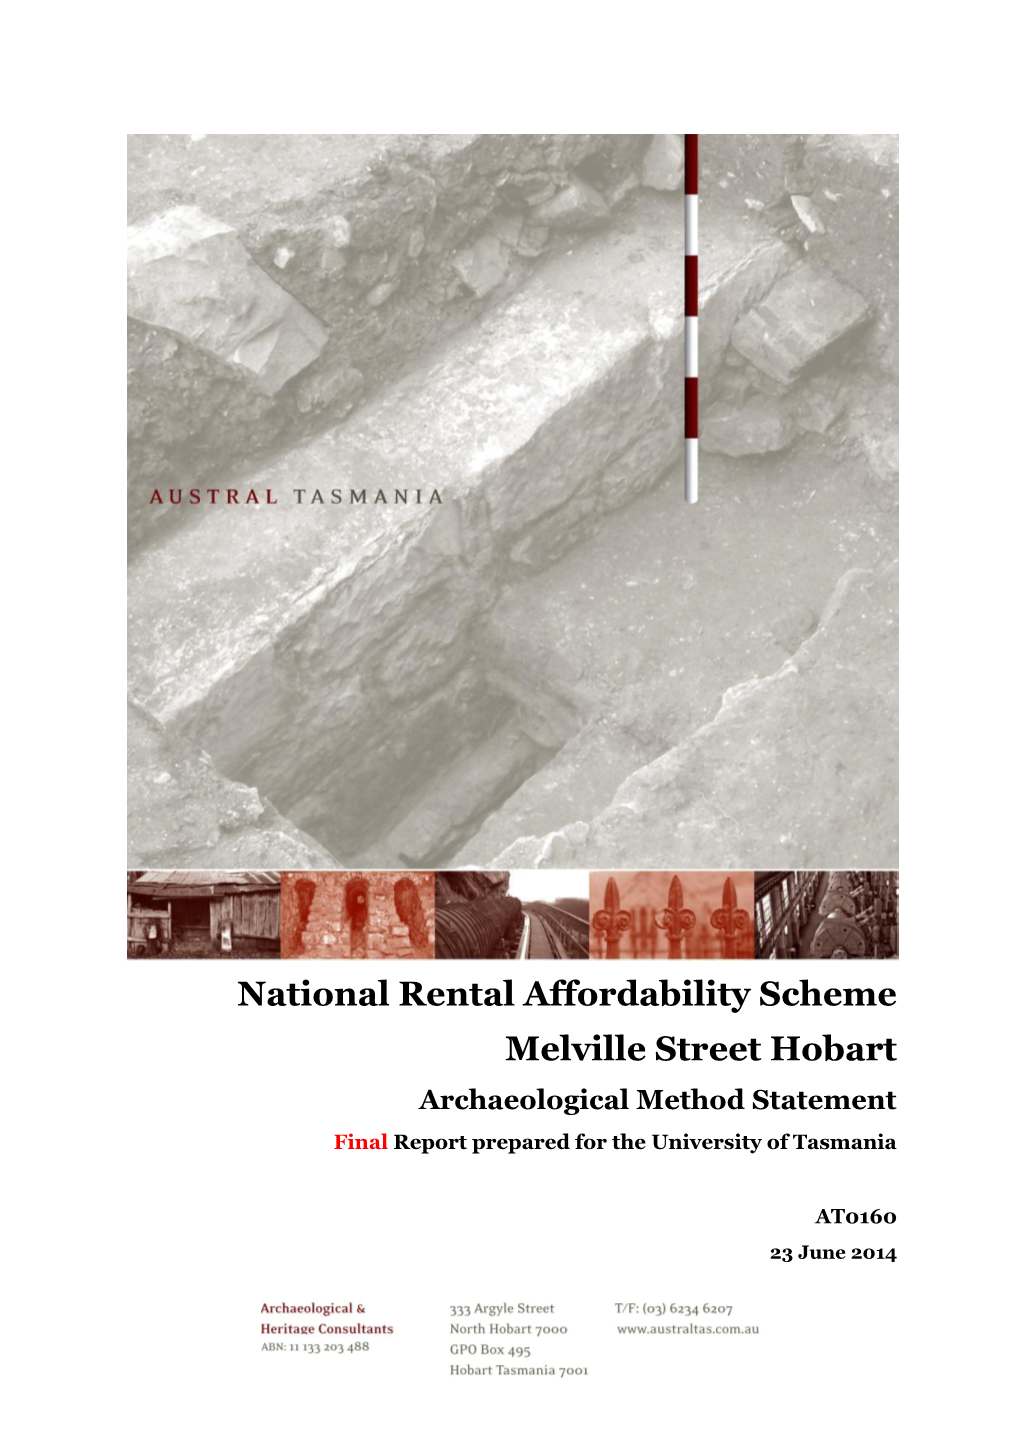 National Rental Affordability Scheme Melville Street Hobart Archaeological Method Statement Final Report Prepared for the University of Tasmania